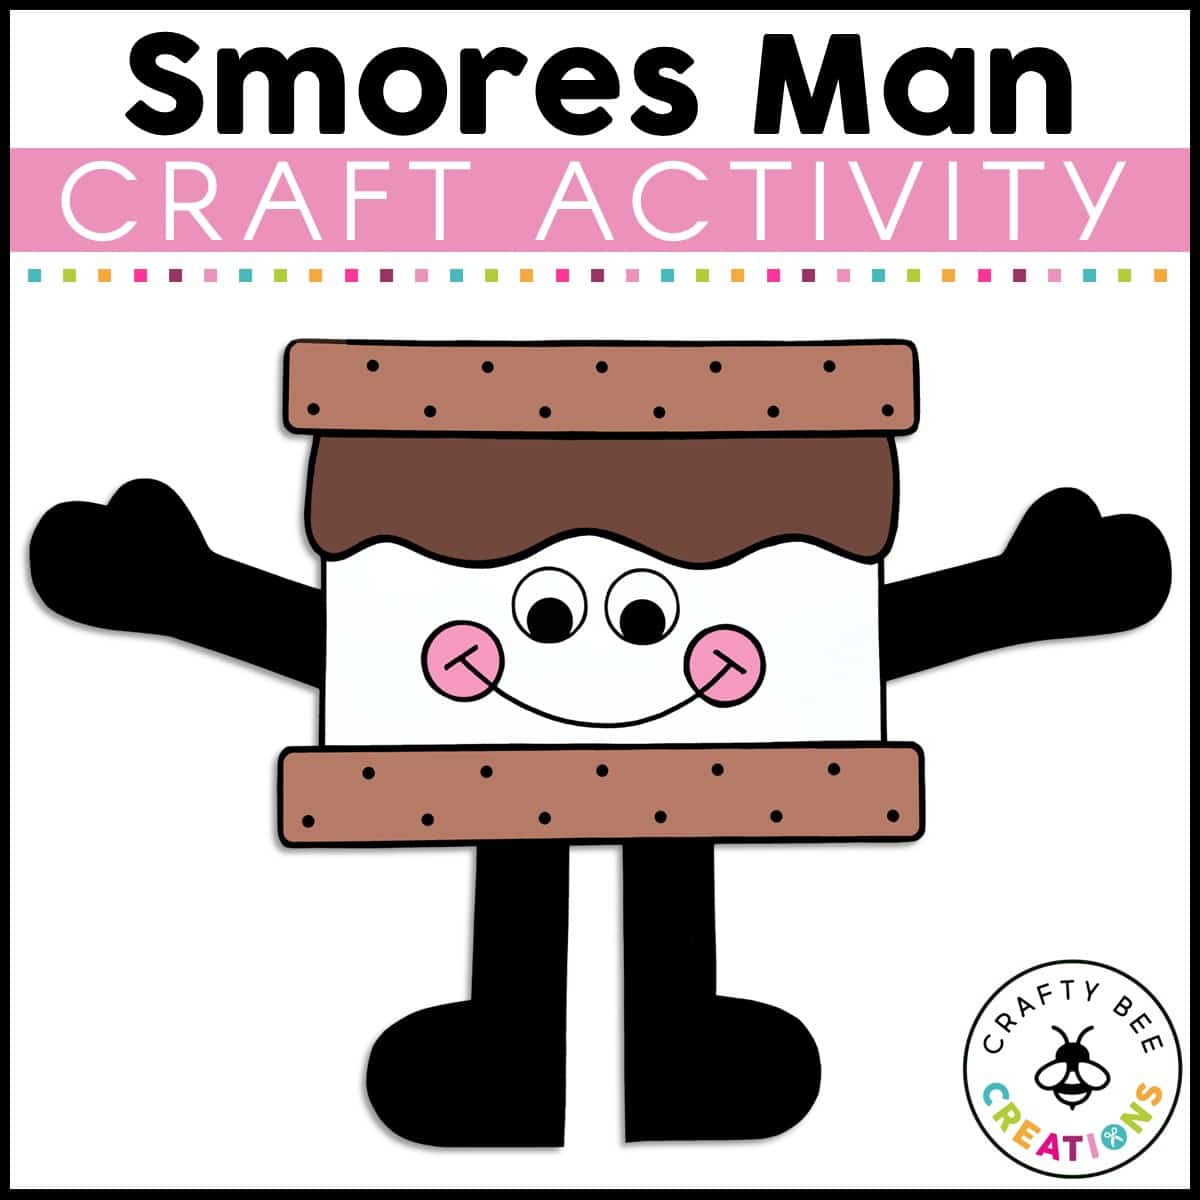 smores-craft-activity-crafty-bee-creations